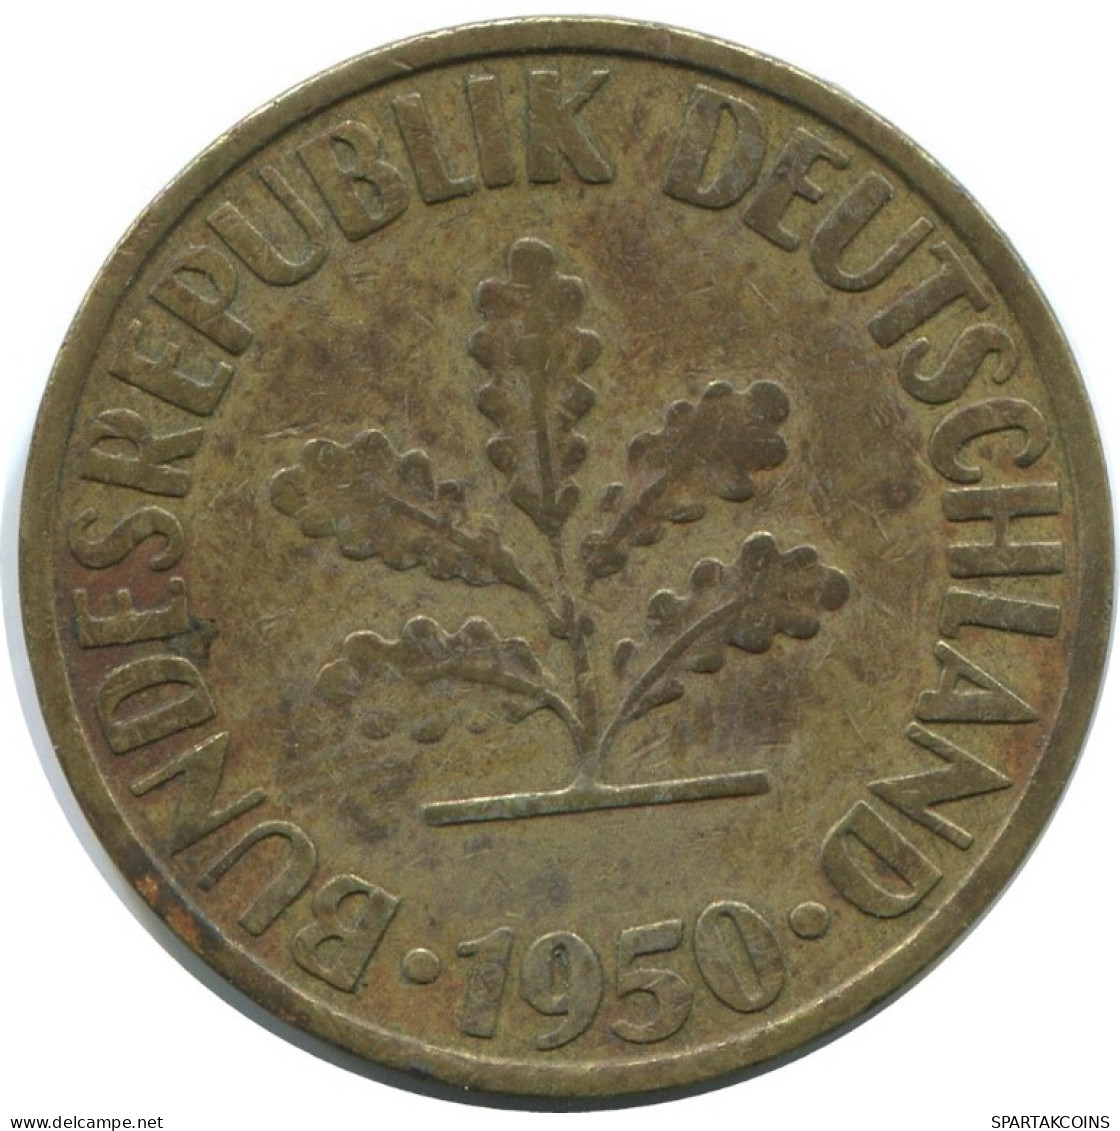 10 PFENNIG 1950 D BRD ALEMANIA Moneda GERMANY #AD850.9.E.A - 10 Pfennig